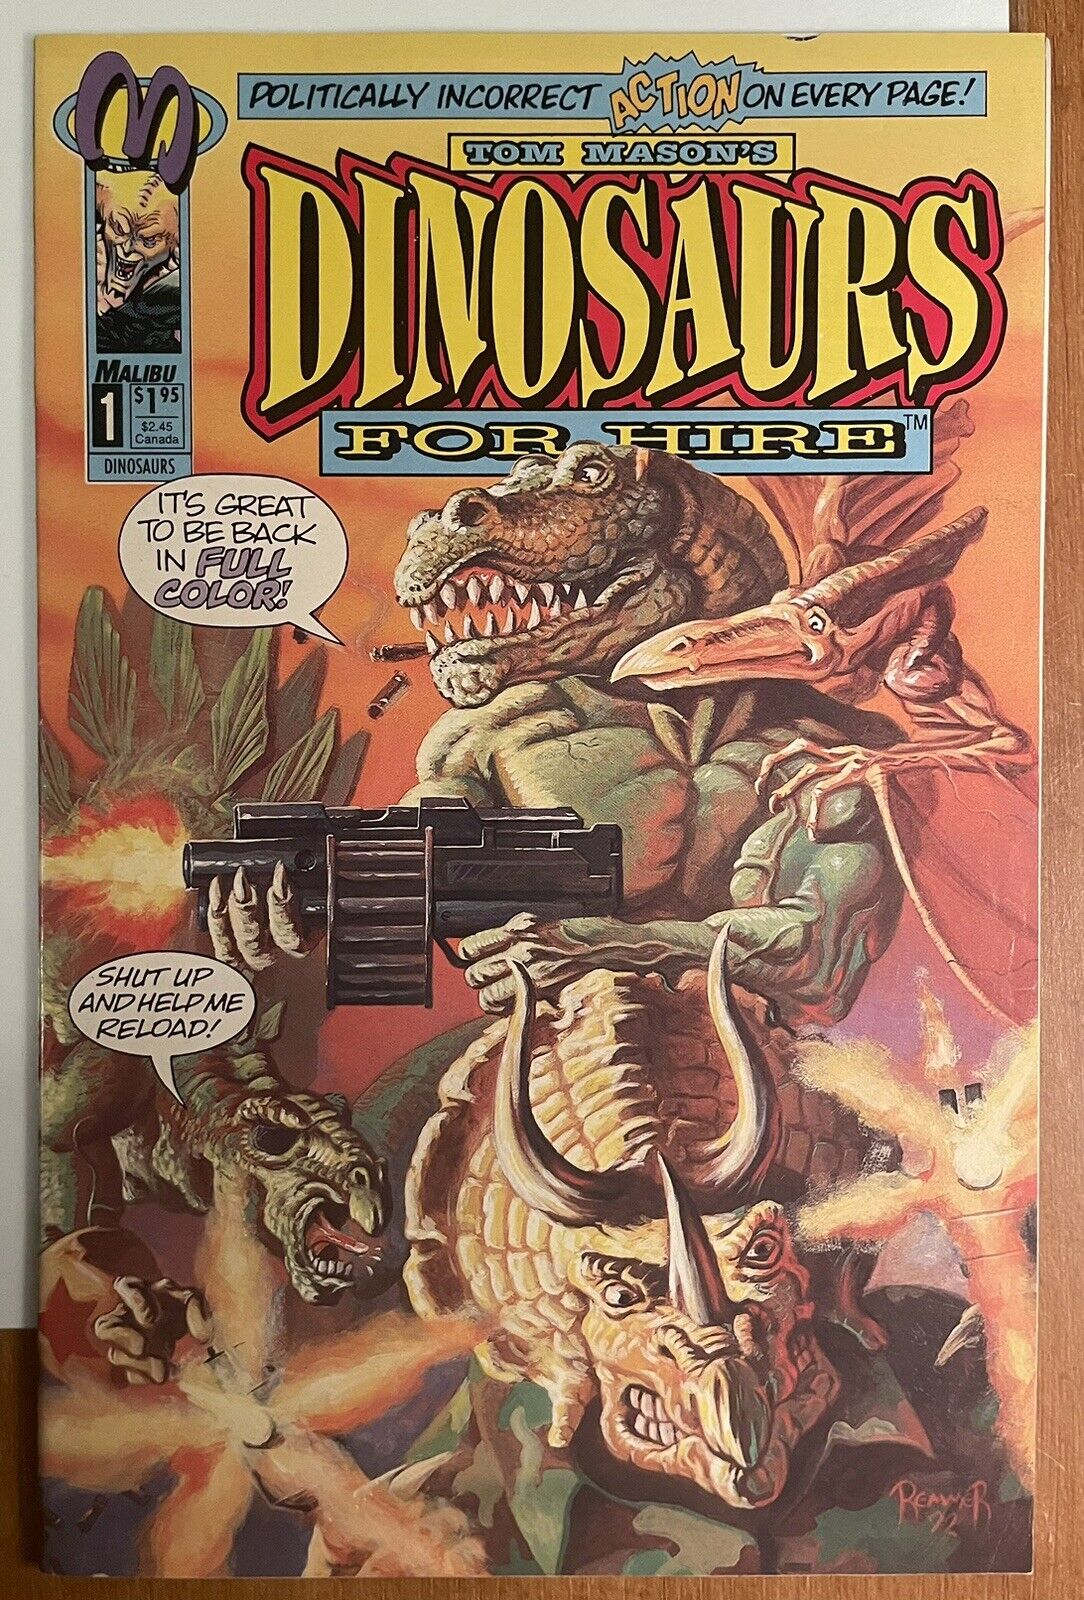 Dinosaurs for Hire Vol. 2 #1 (Malibu Comics, 1993)- VF- Combined Shipping